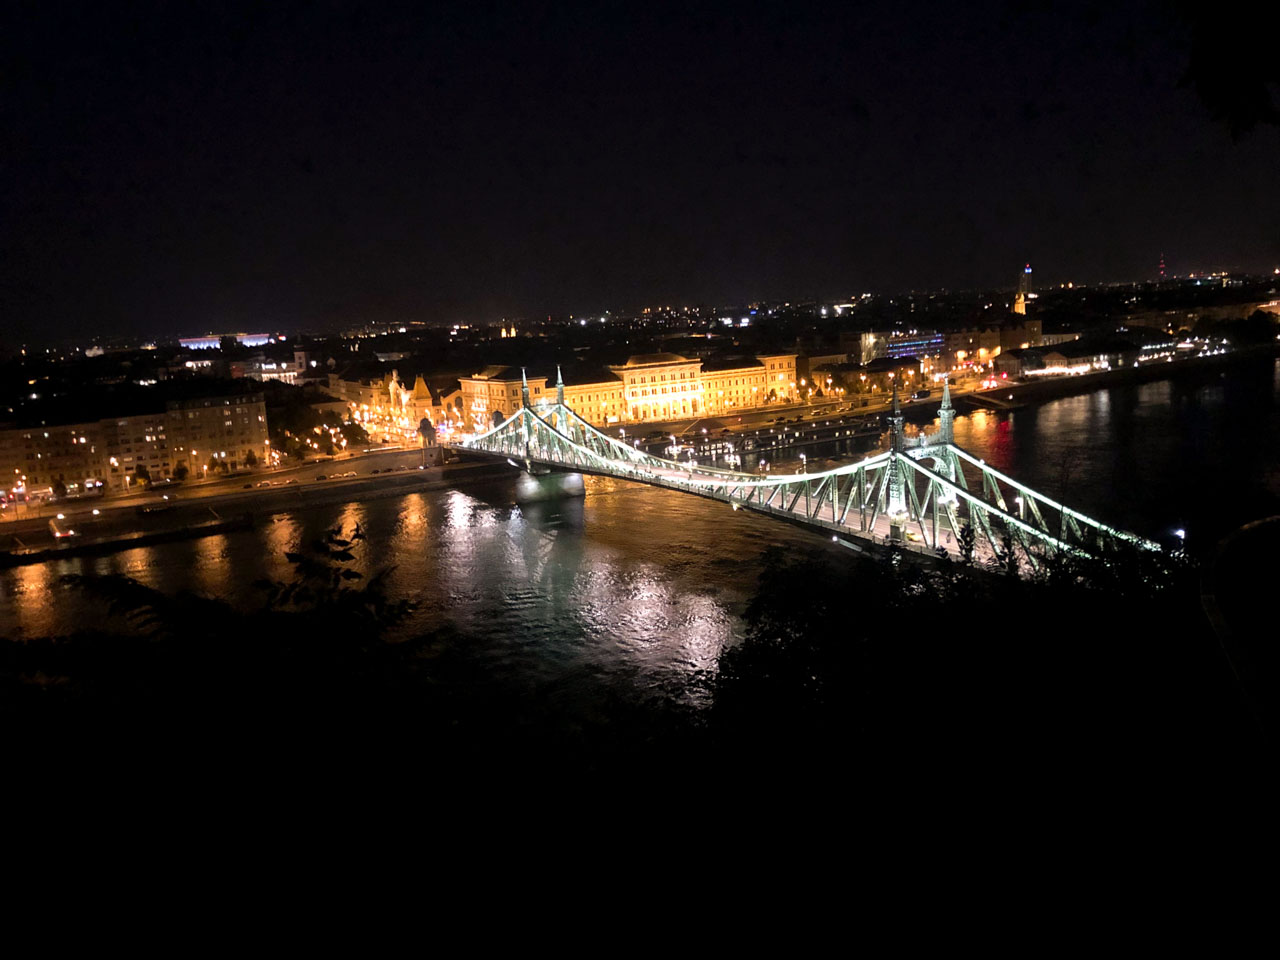 Szabadság / Liberty Bridge in Budapest seen from Gellért Hill at night